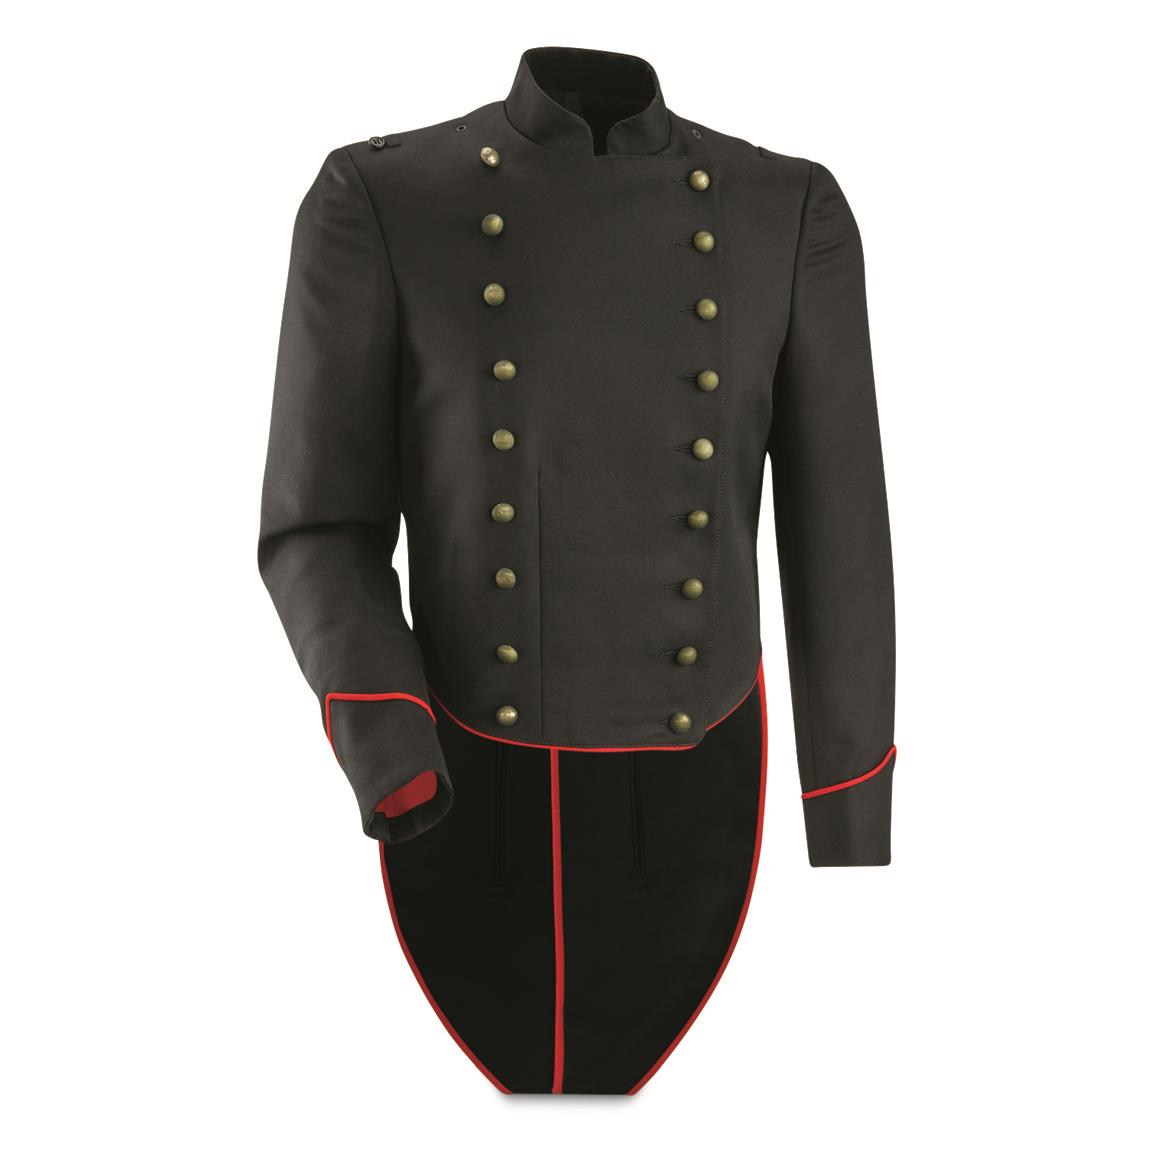 Italian Carabinieri Police Surplus Wool Parade Jacket, New, Black